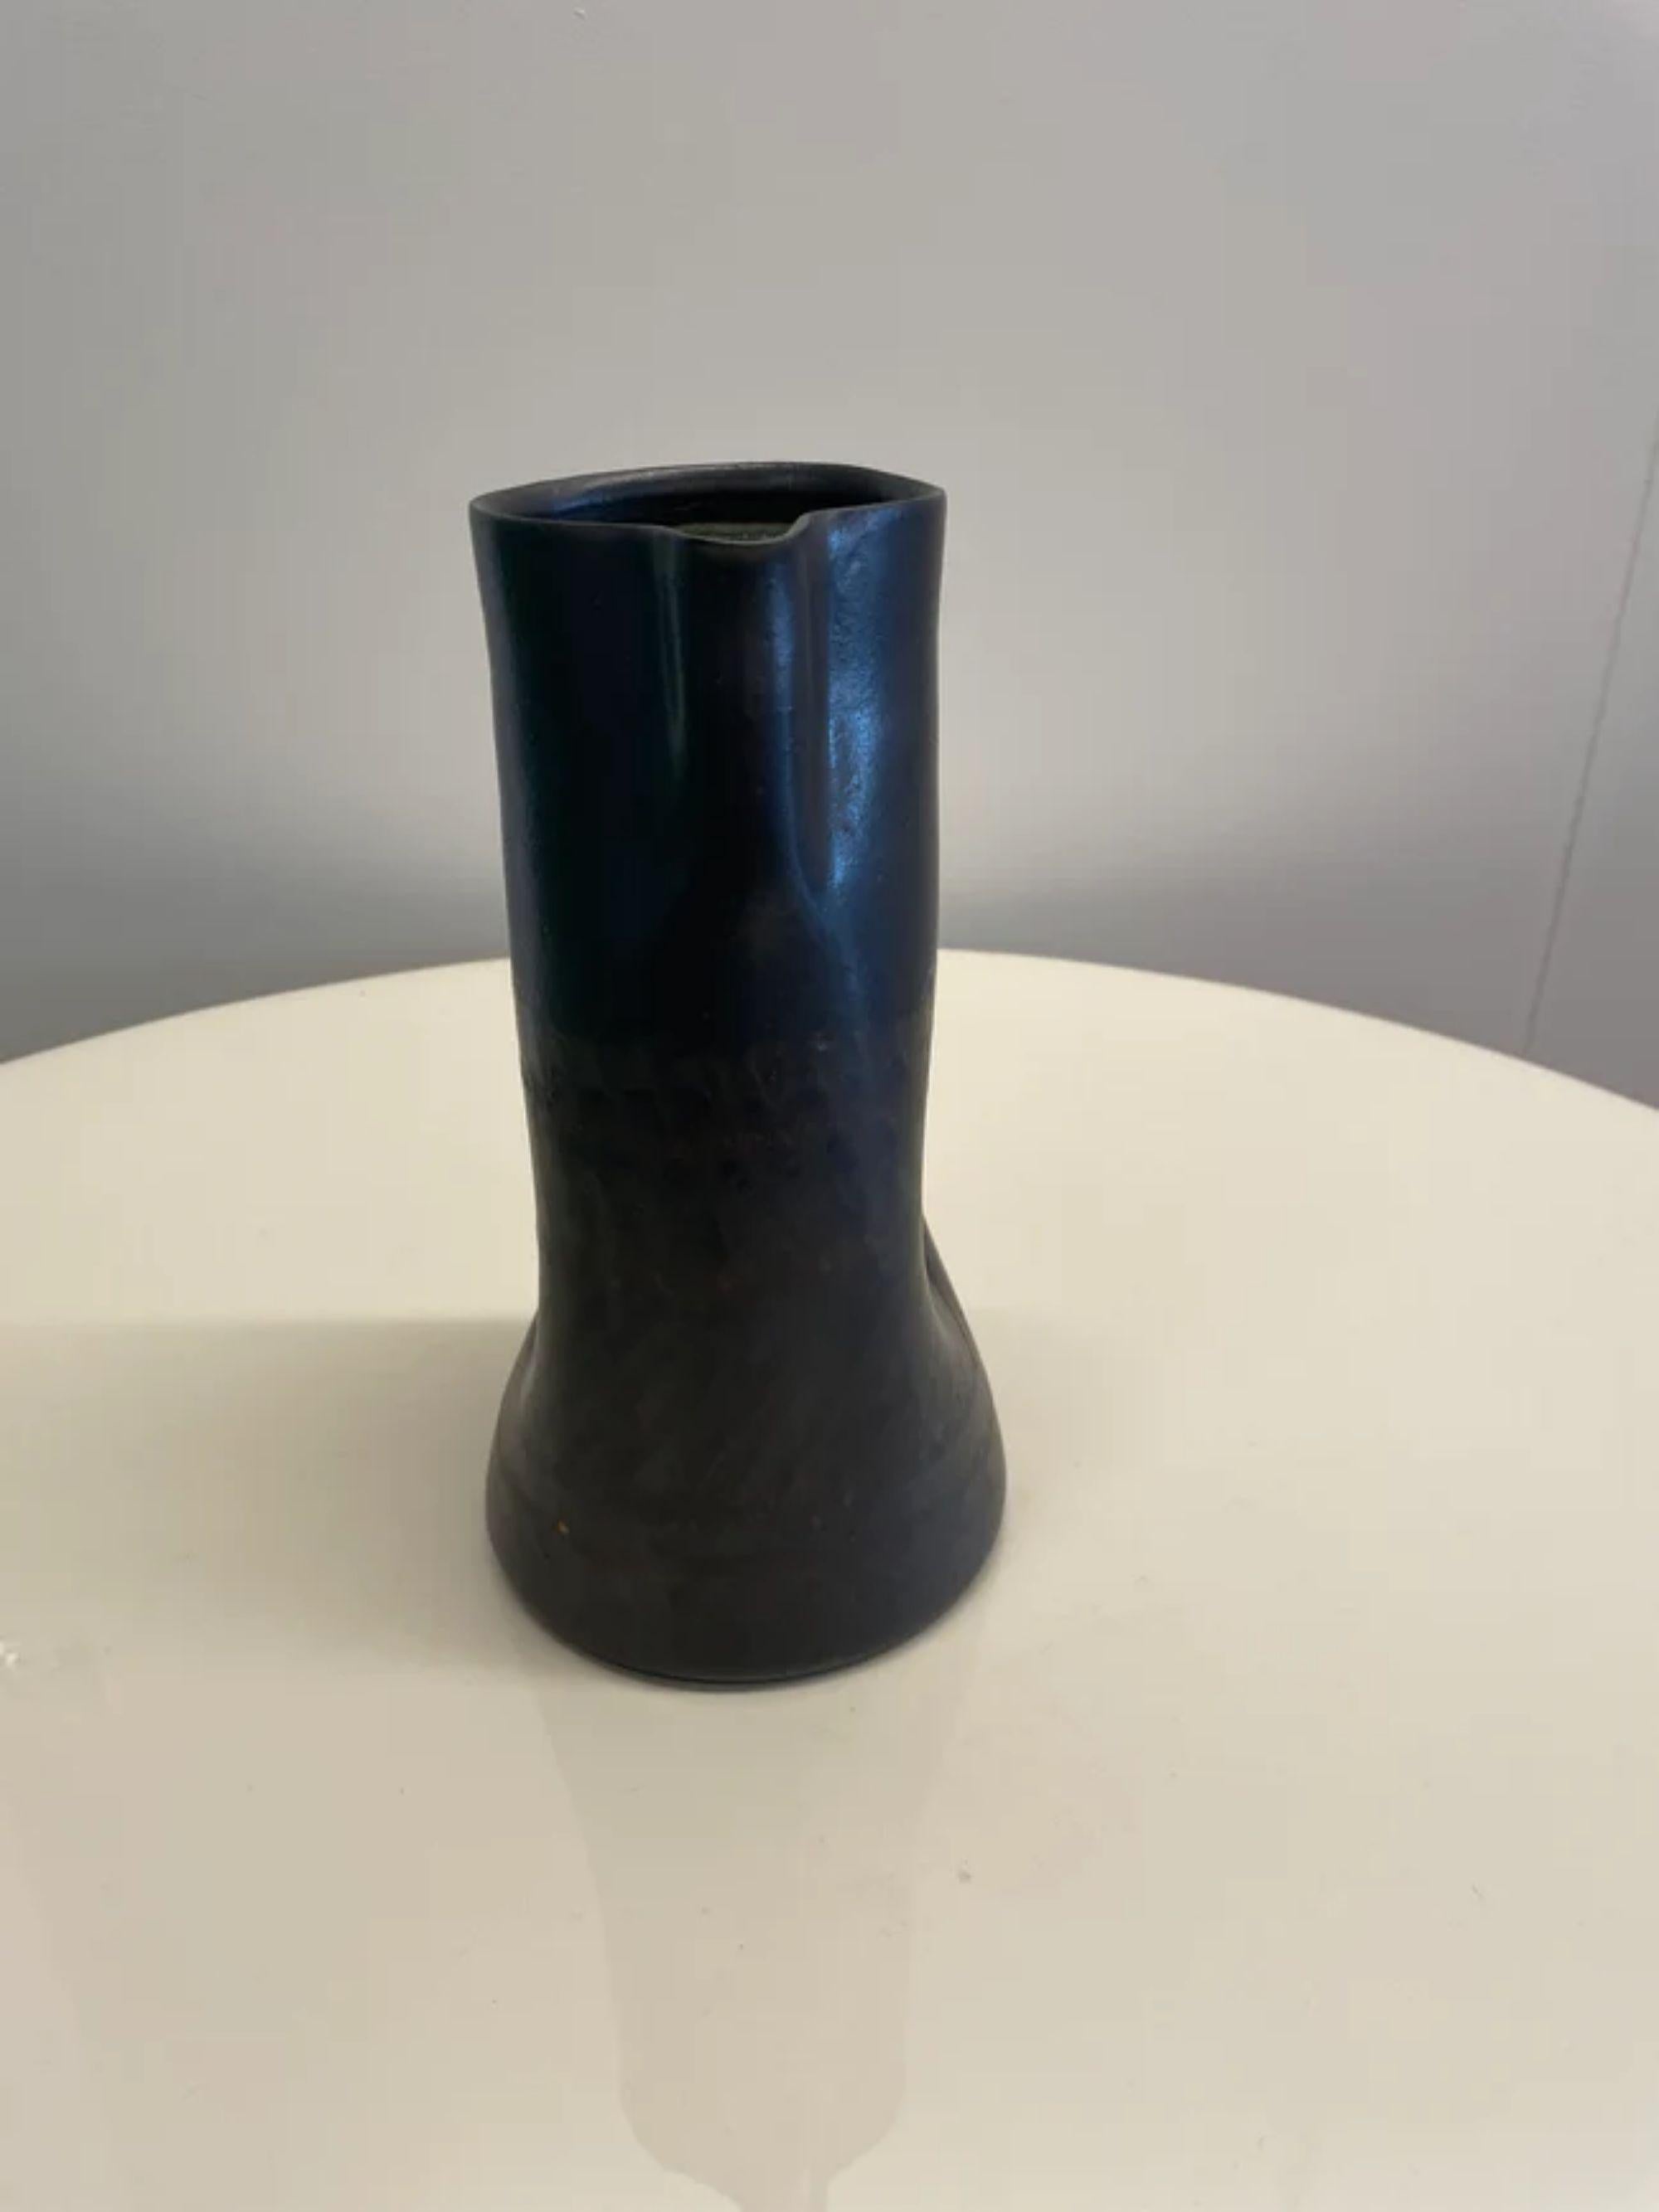 Glazed Ceramic Vase by Alessio Tasca, 1970s